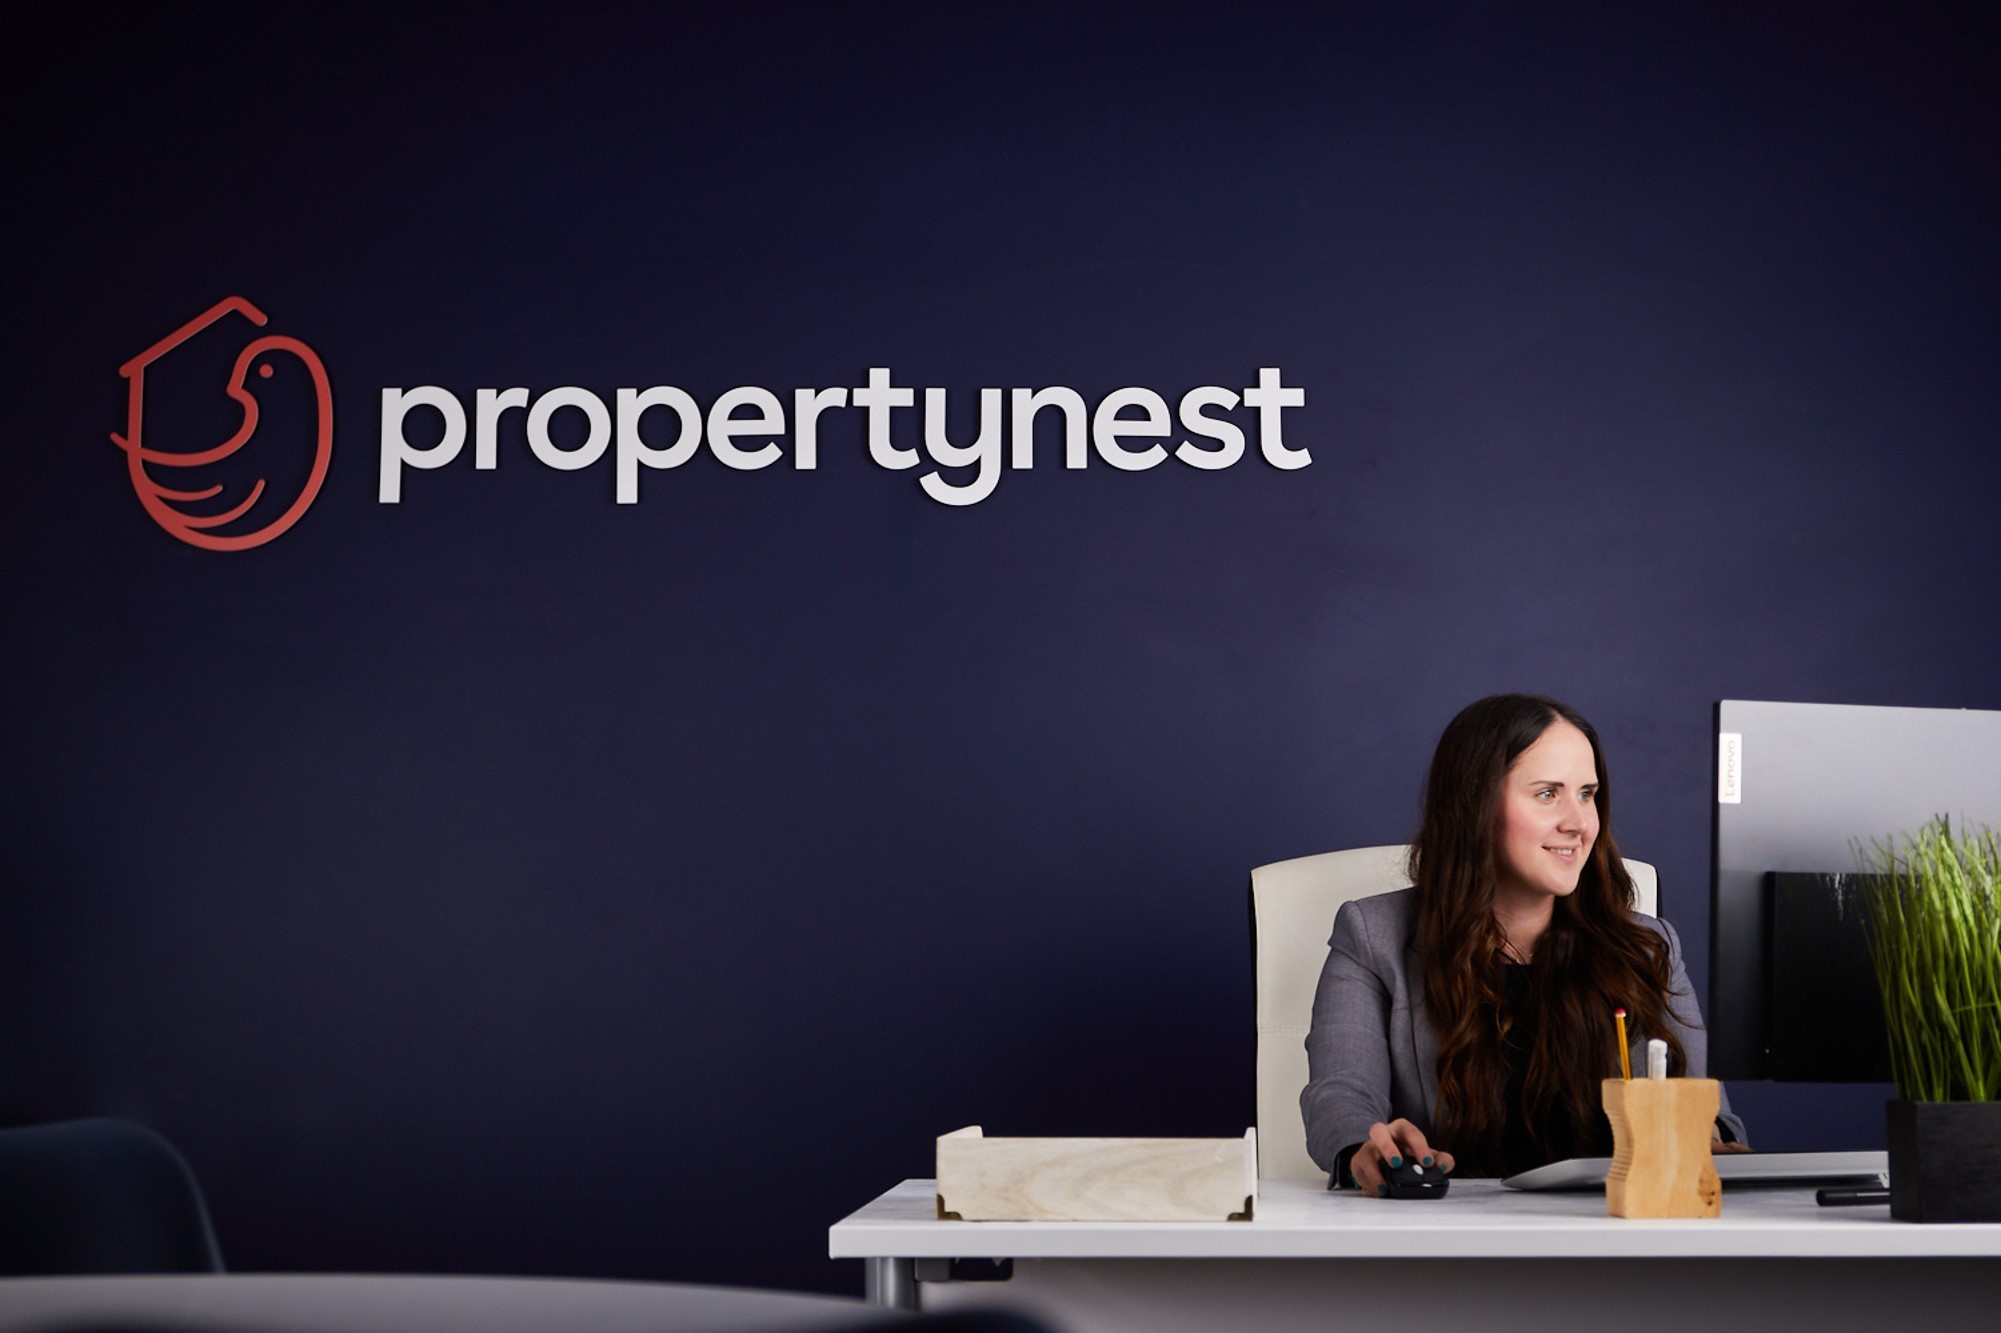 PropertyNest-Franchise-Desktop-Woman